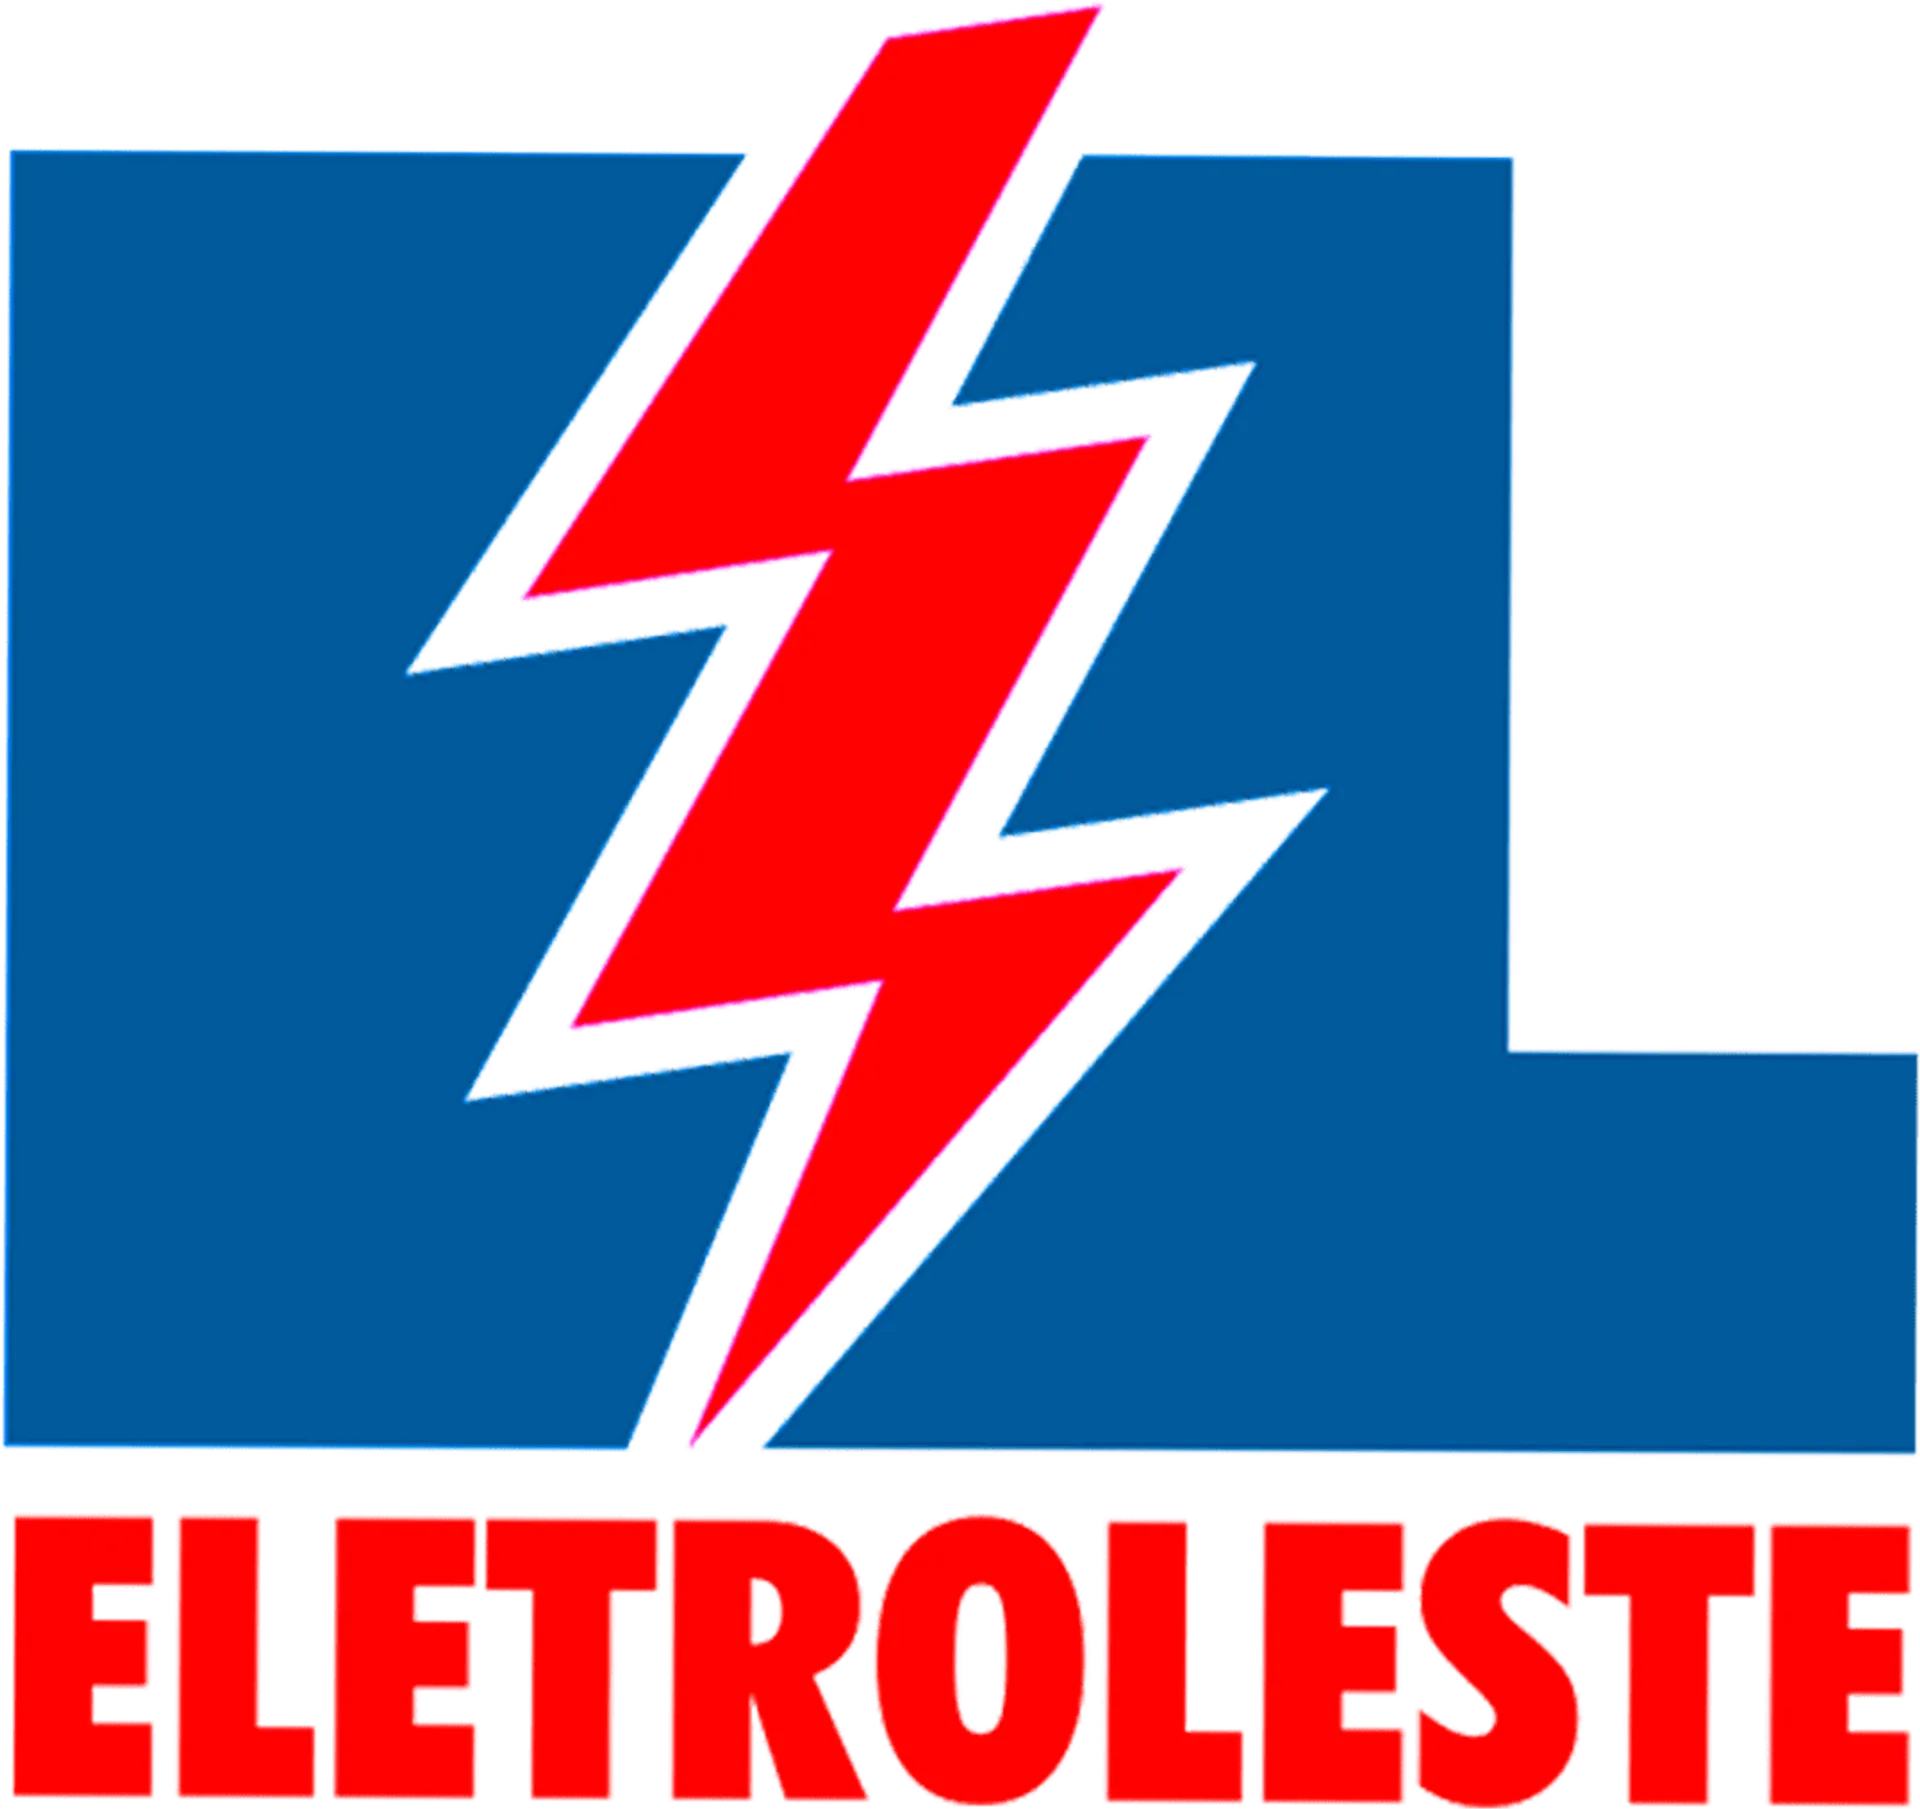 ELETROLESTE logo